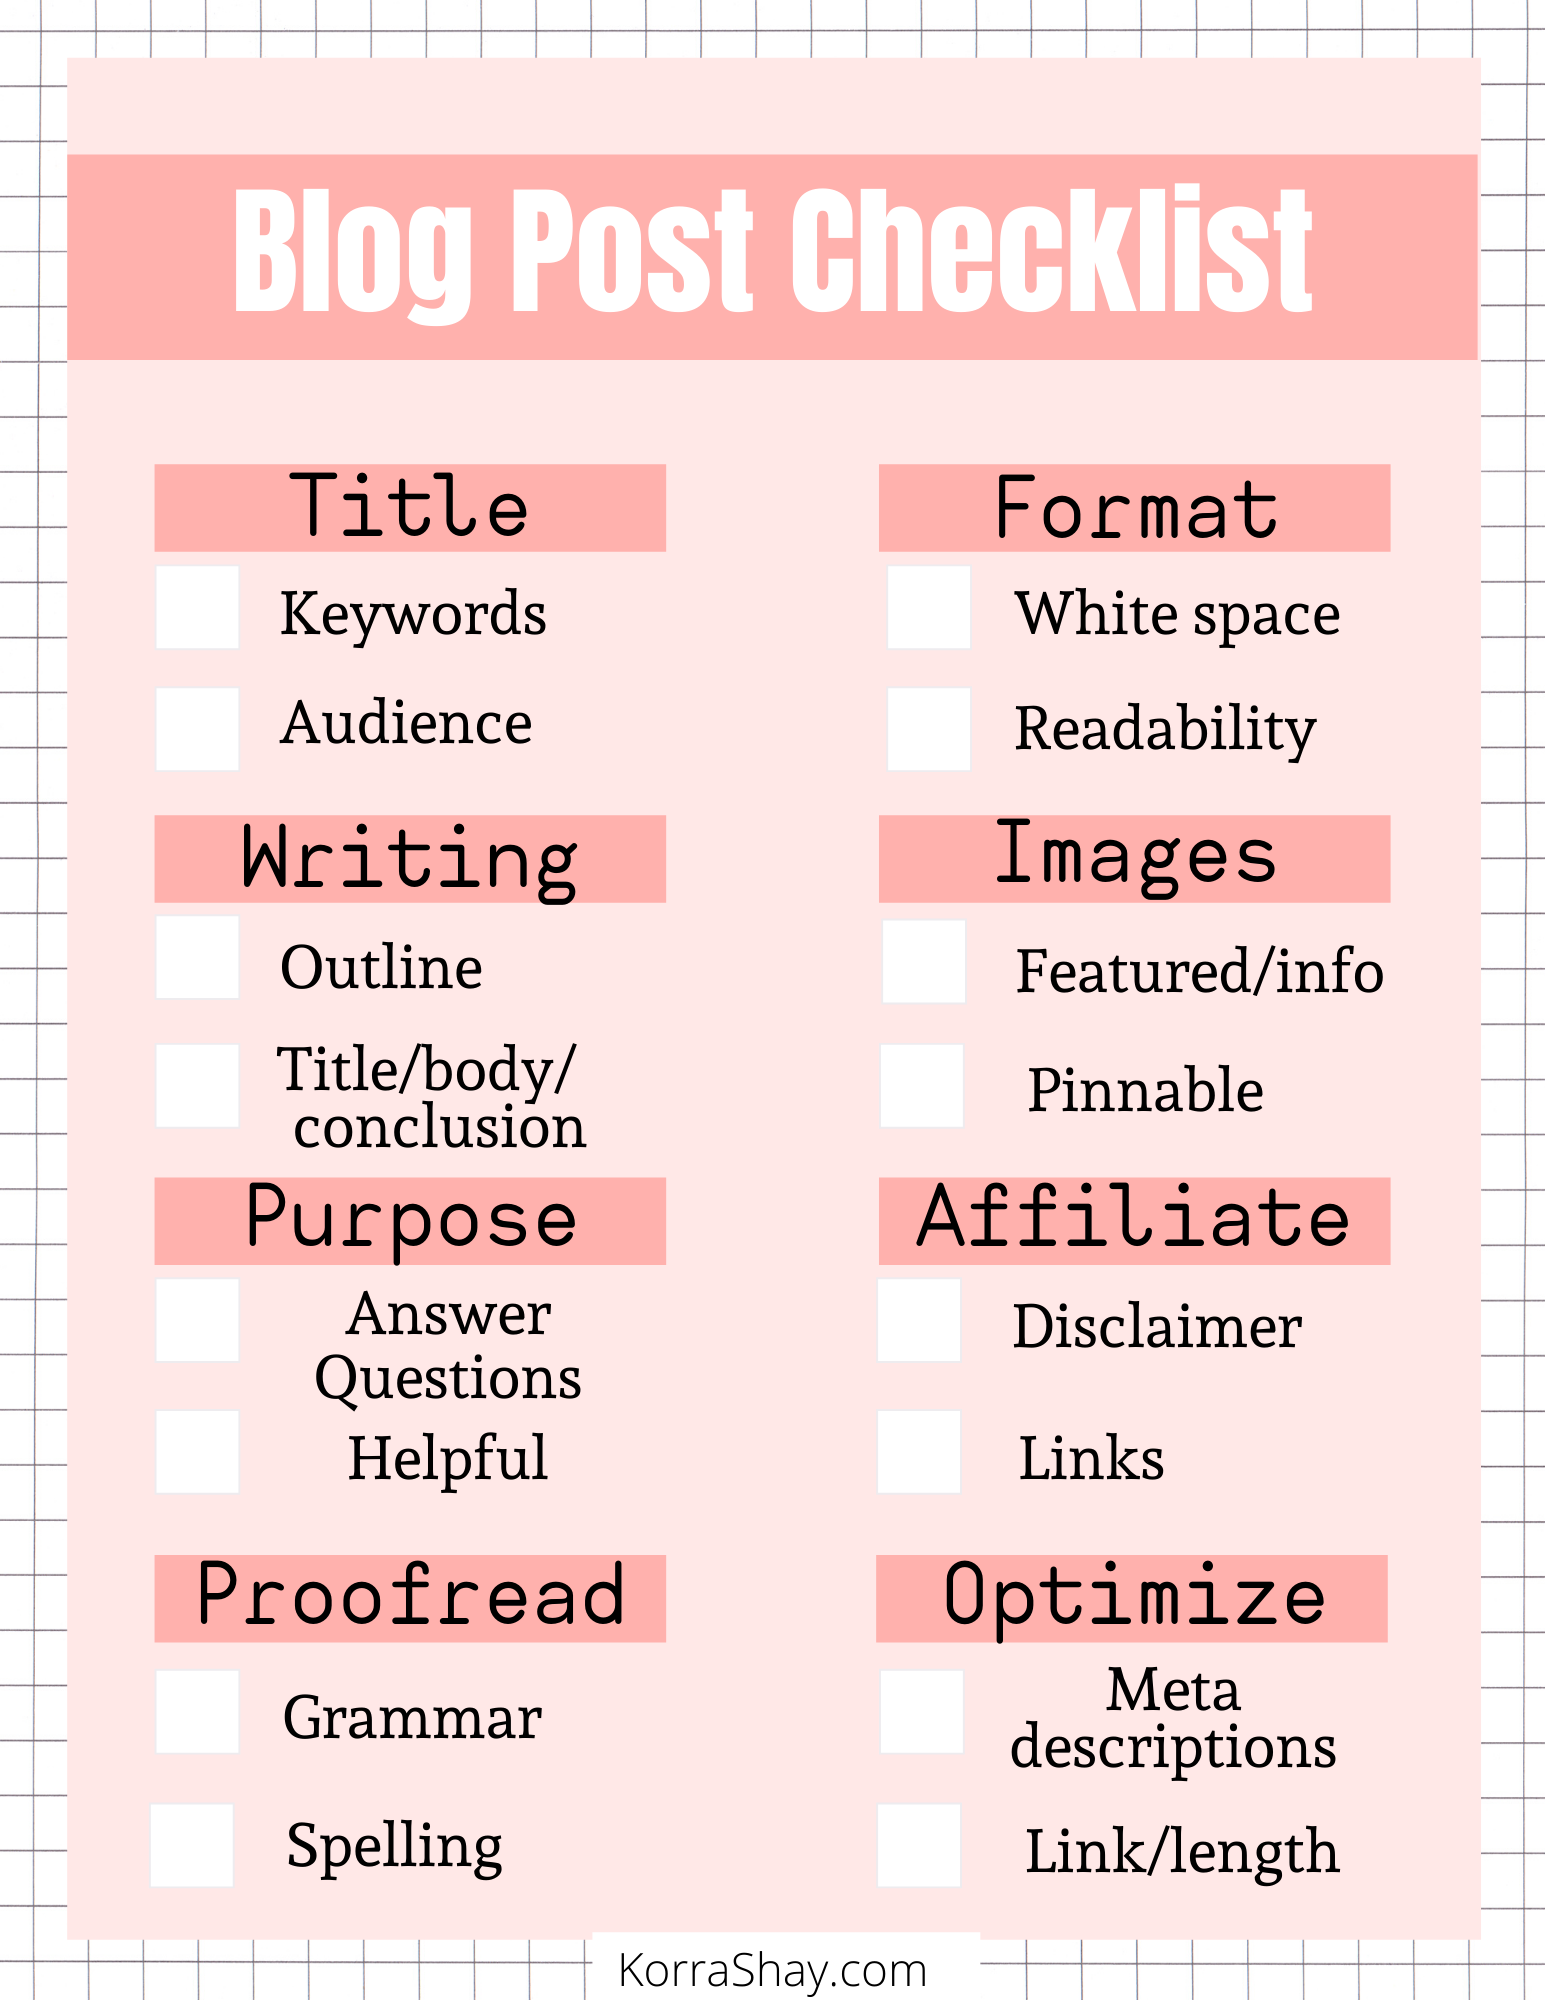 Blog Post Checklist-3